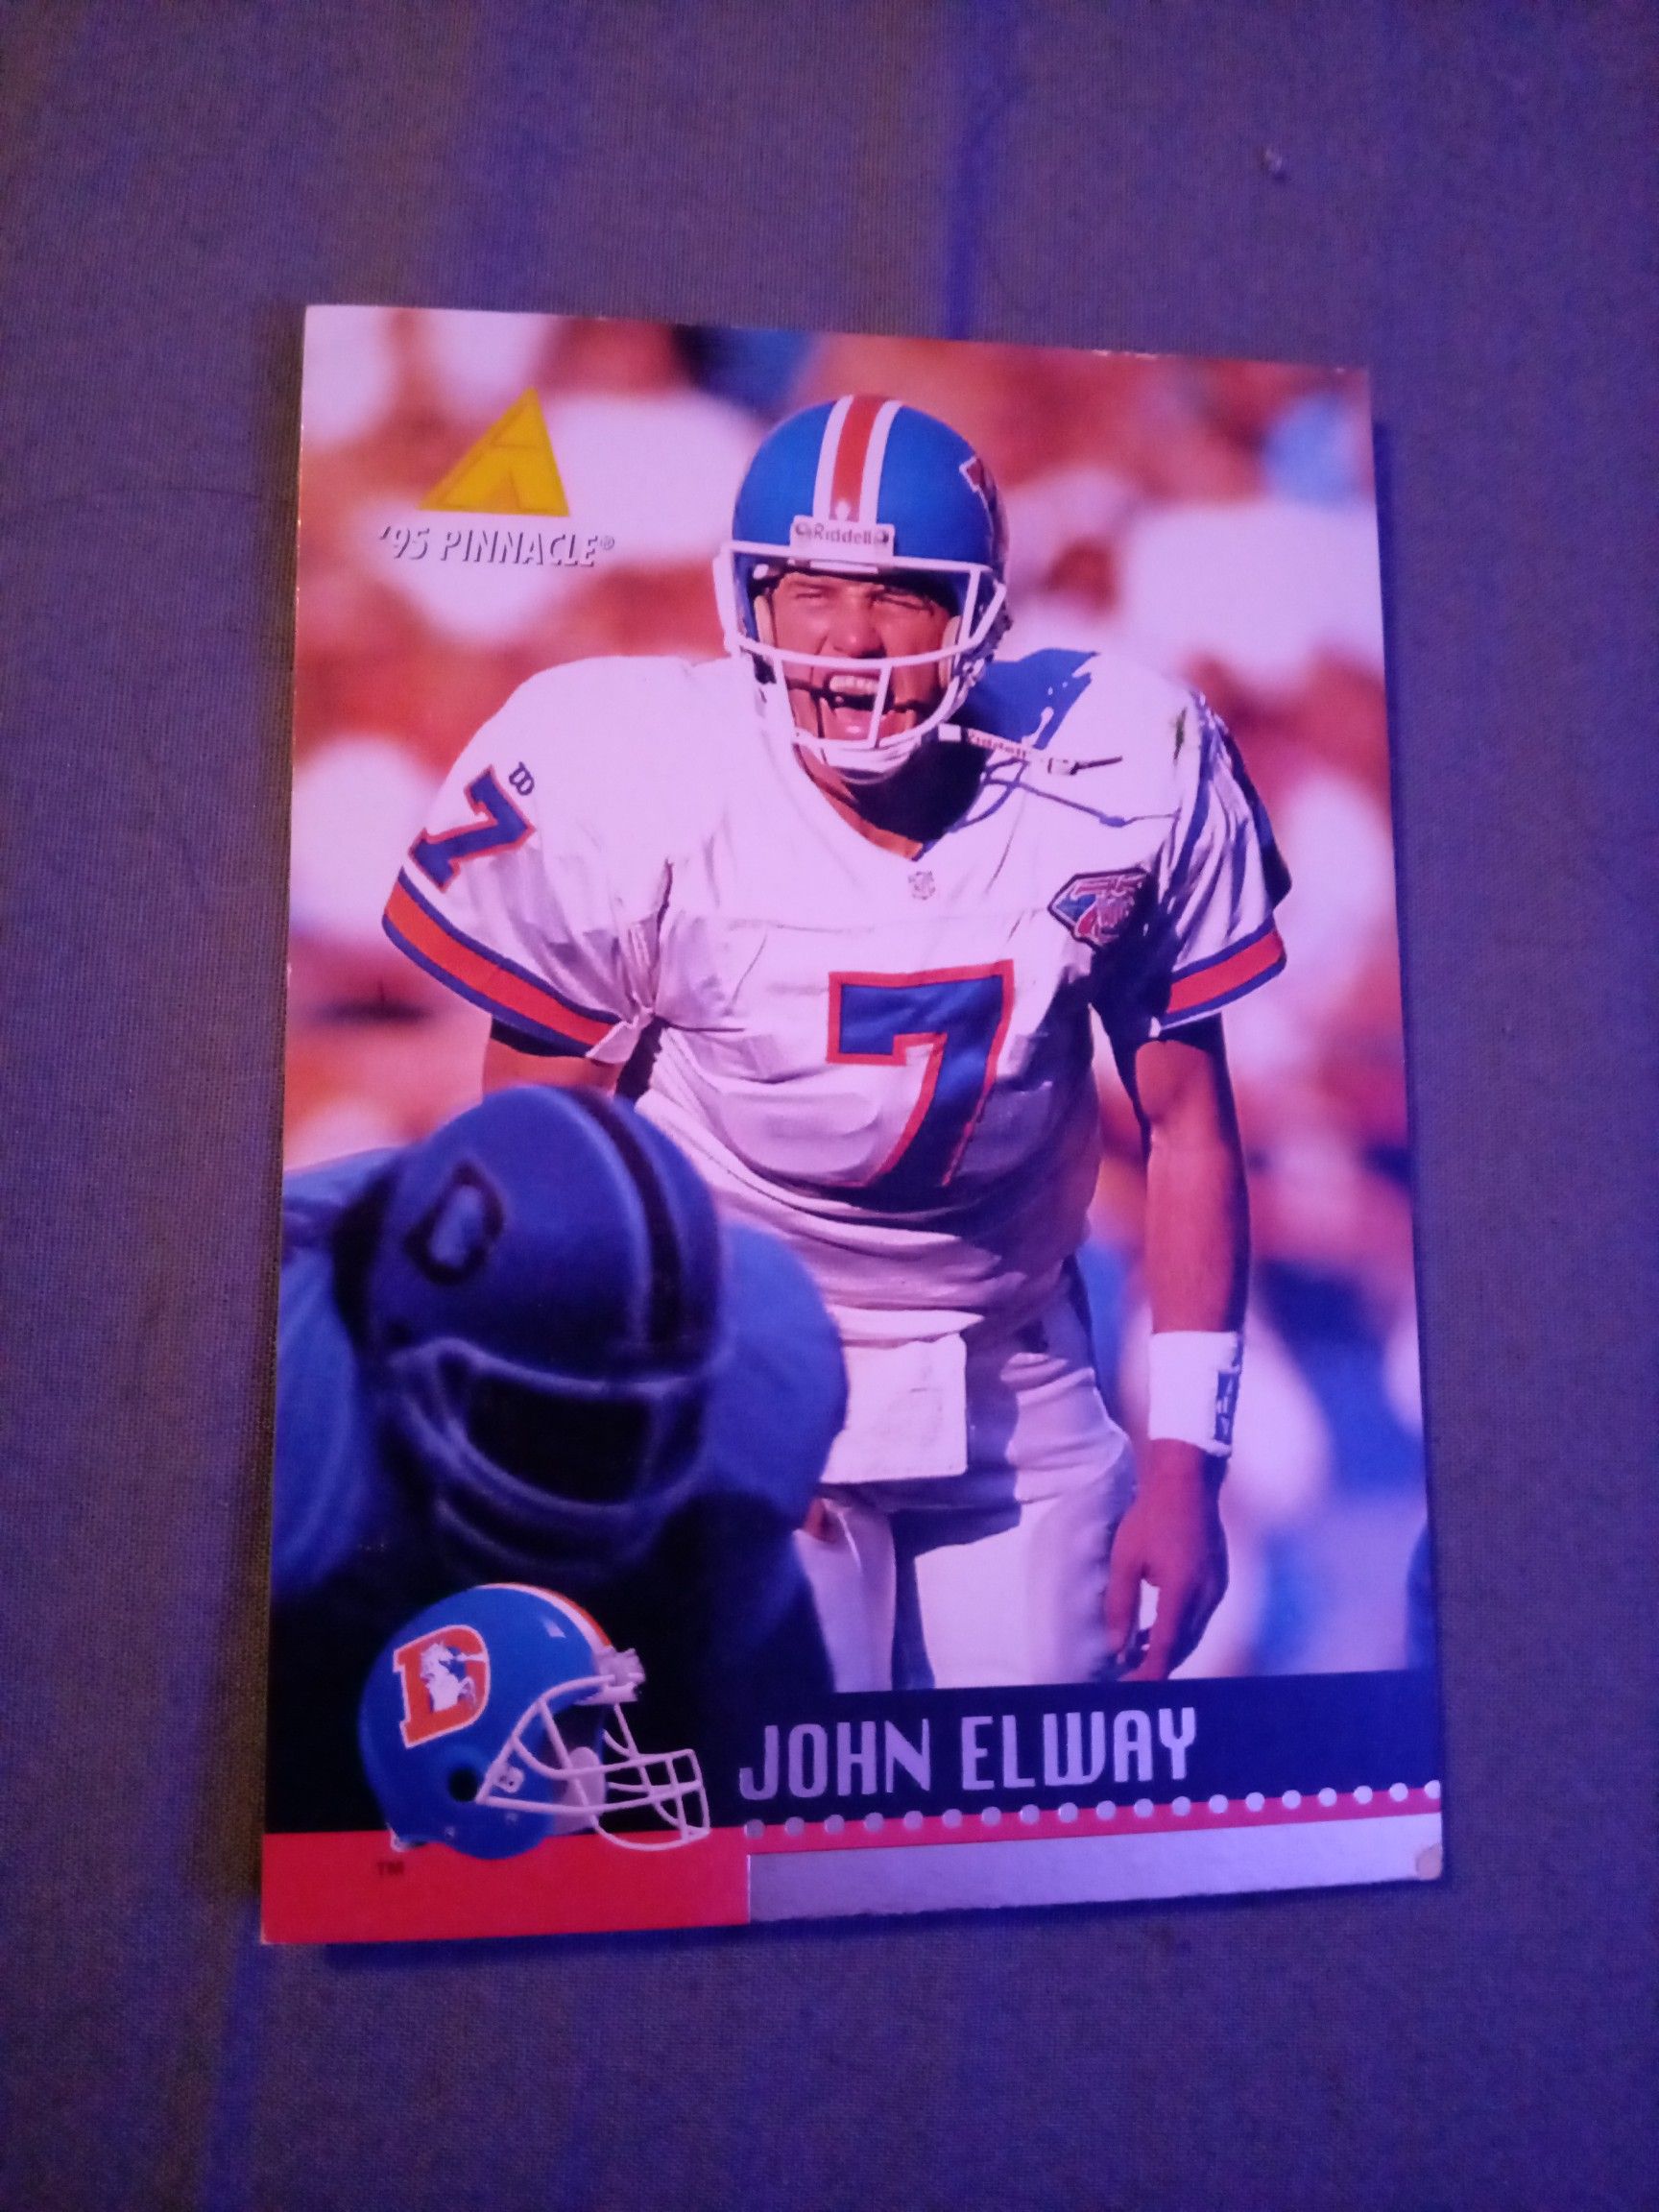 John Elway #7 Denver Broncos 1995 Pinnacle's Card # DC 7